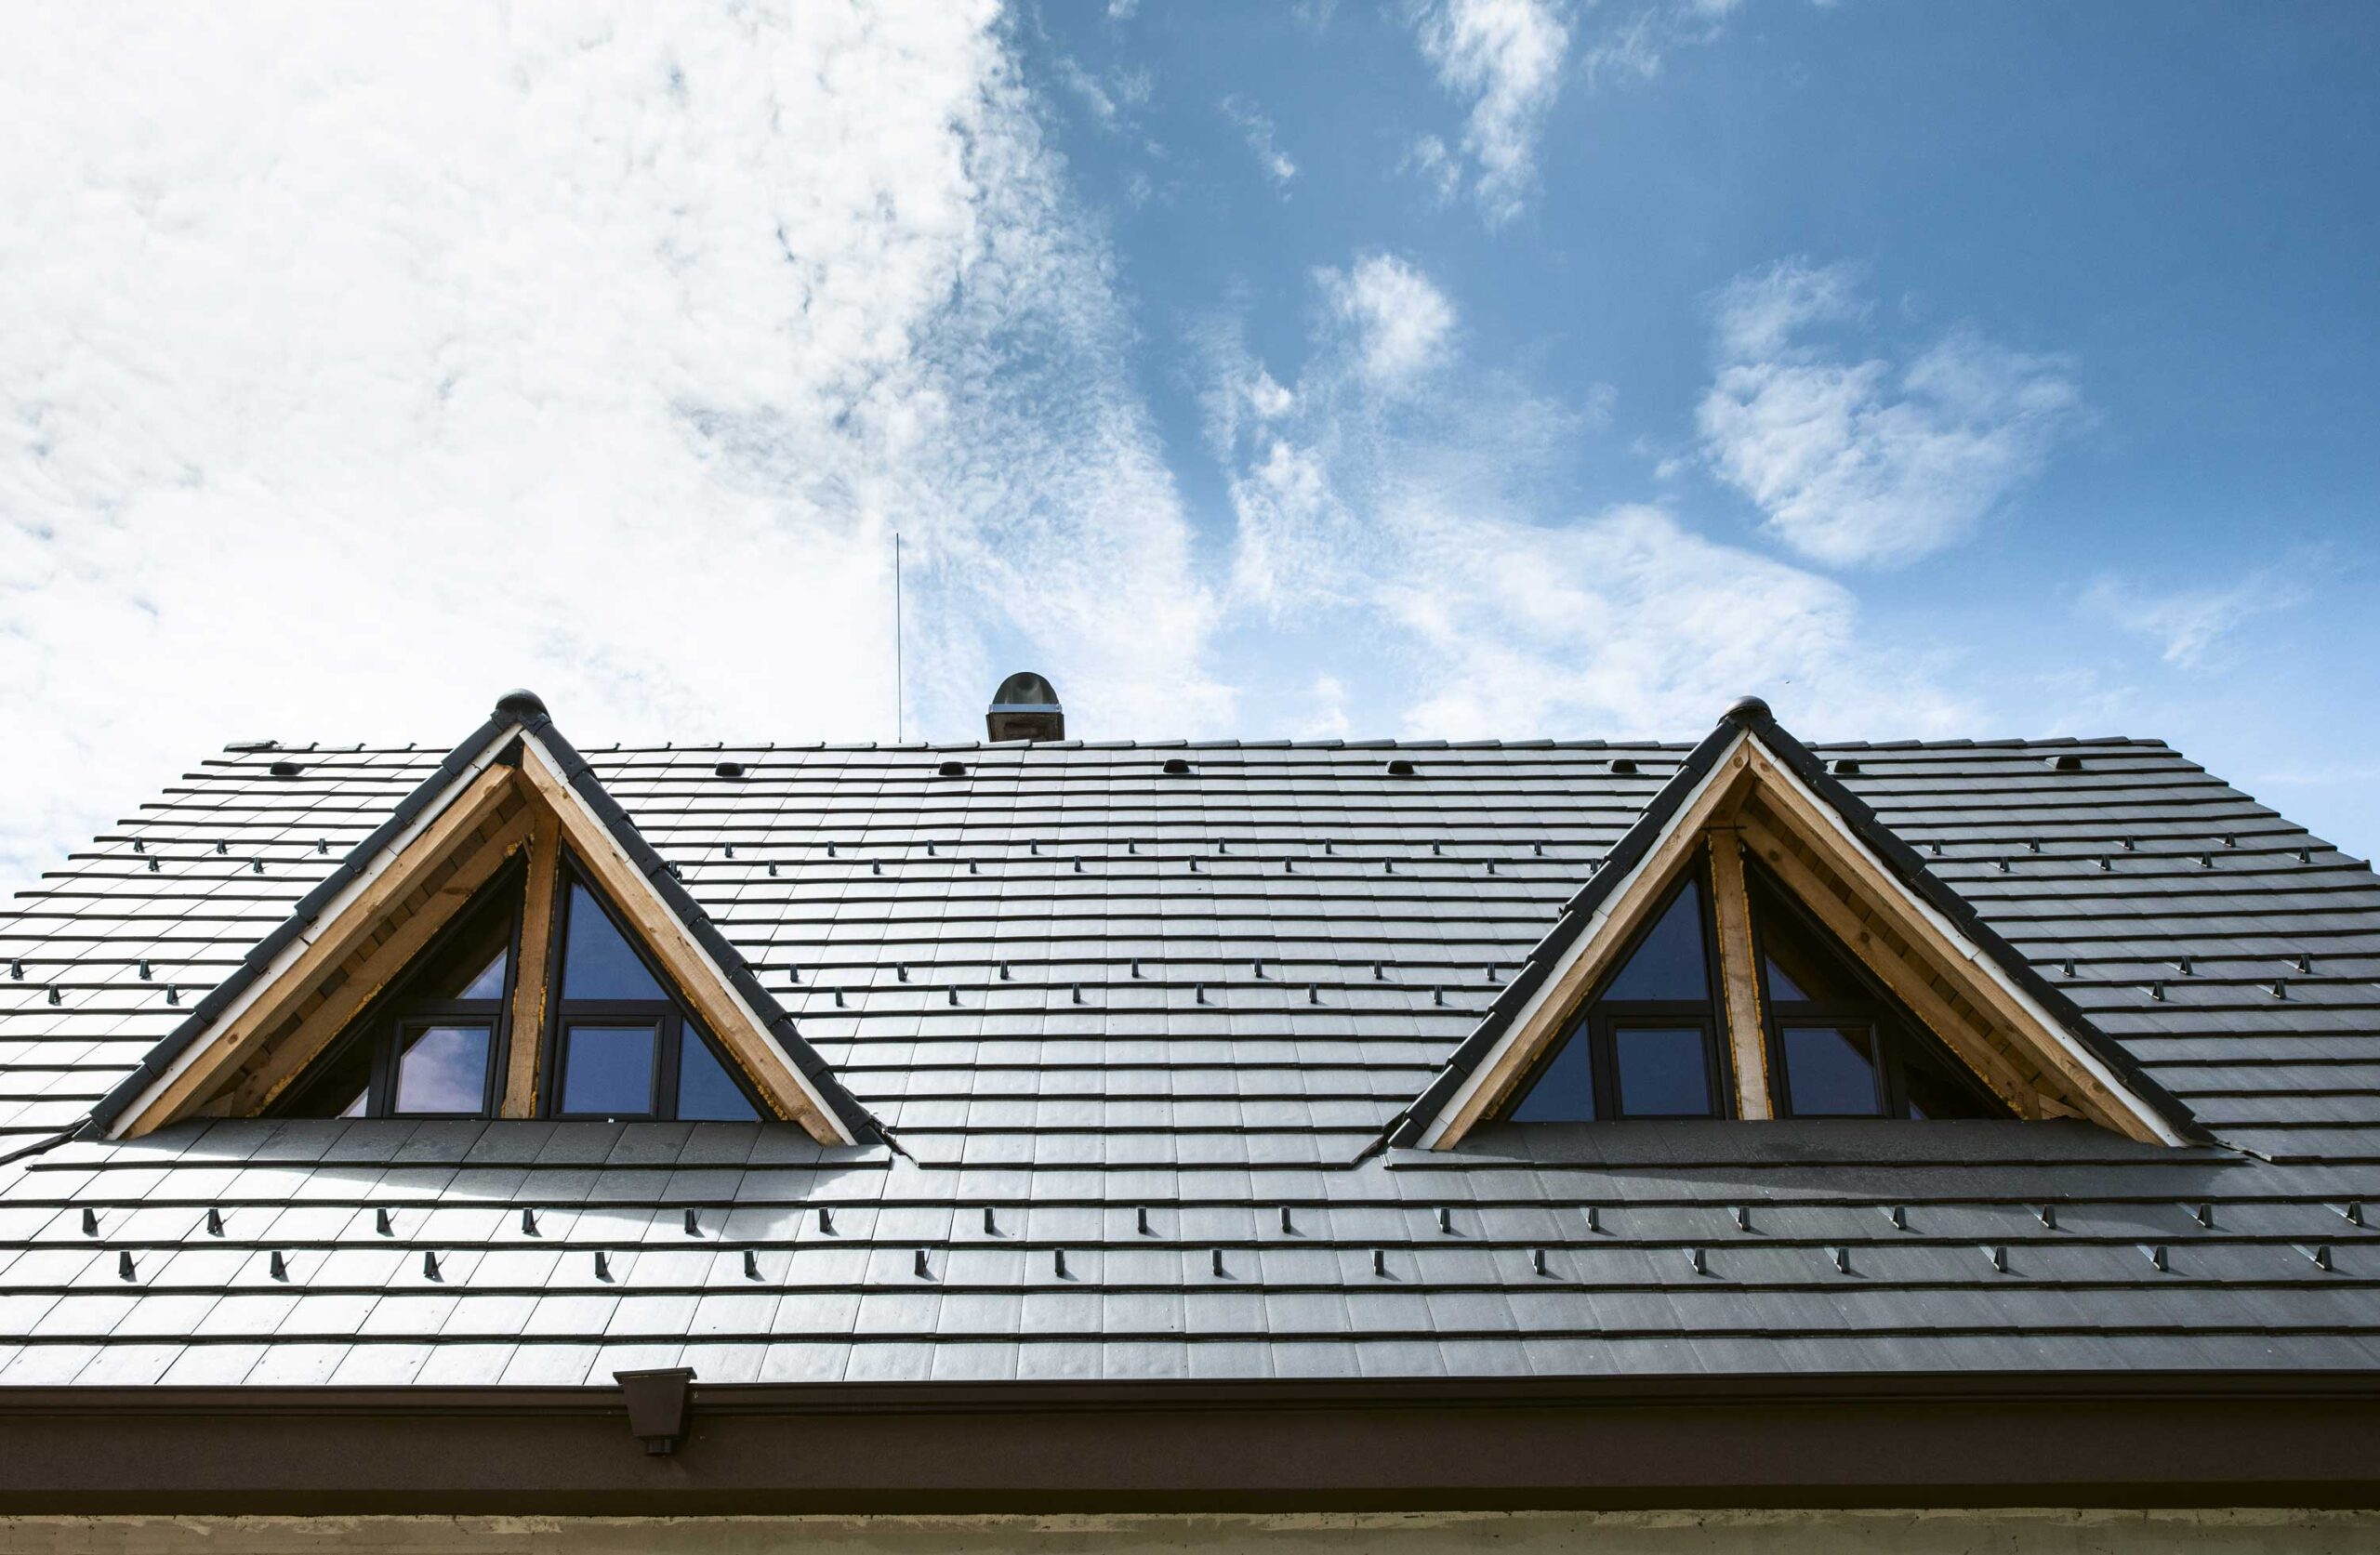 slate roof lifespan, how long do slate roofs last in Zion, slate roof maintenance tips,